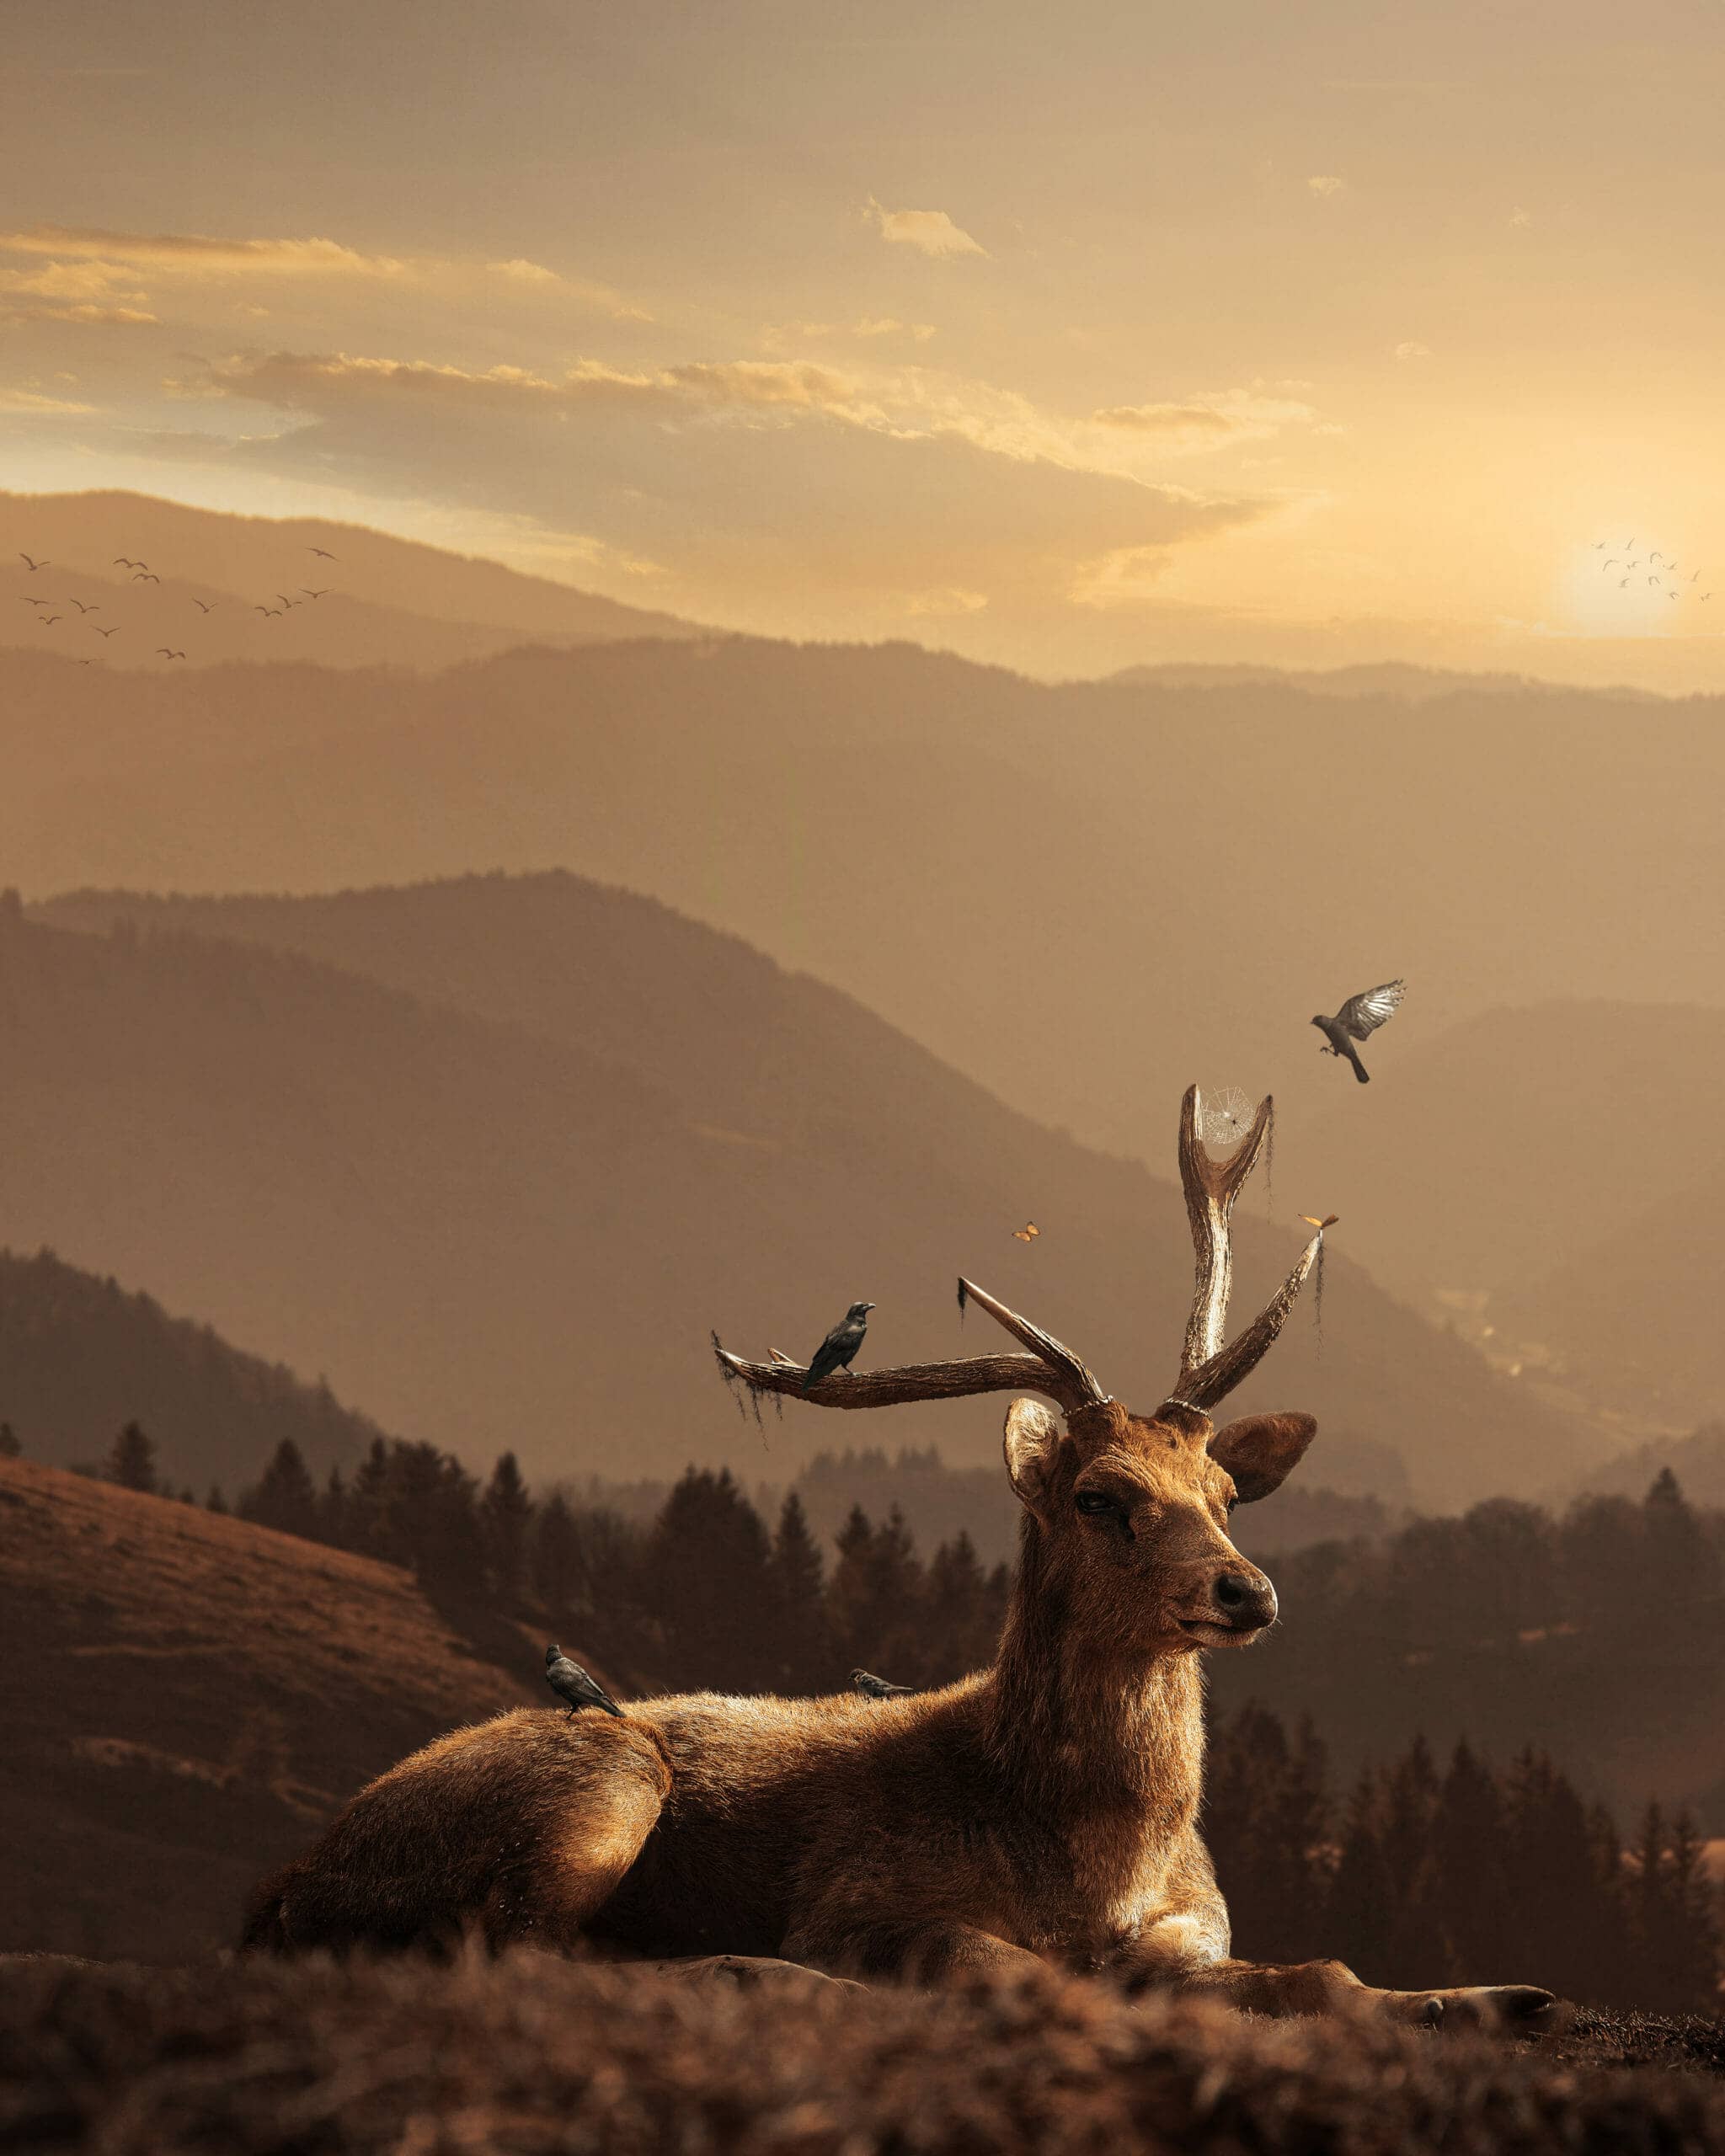 Create a Warm Landscape Scene of a Deer Photoshop Tutorial